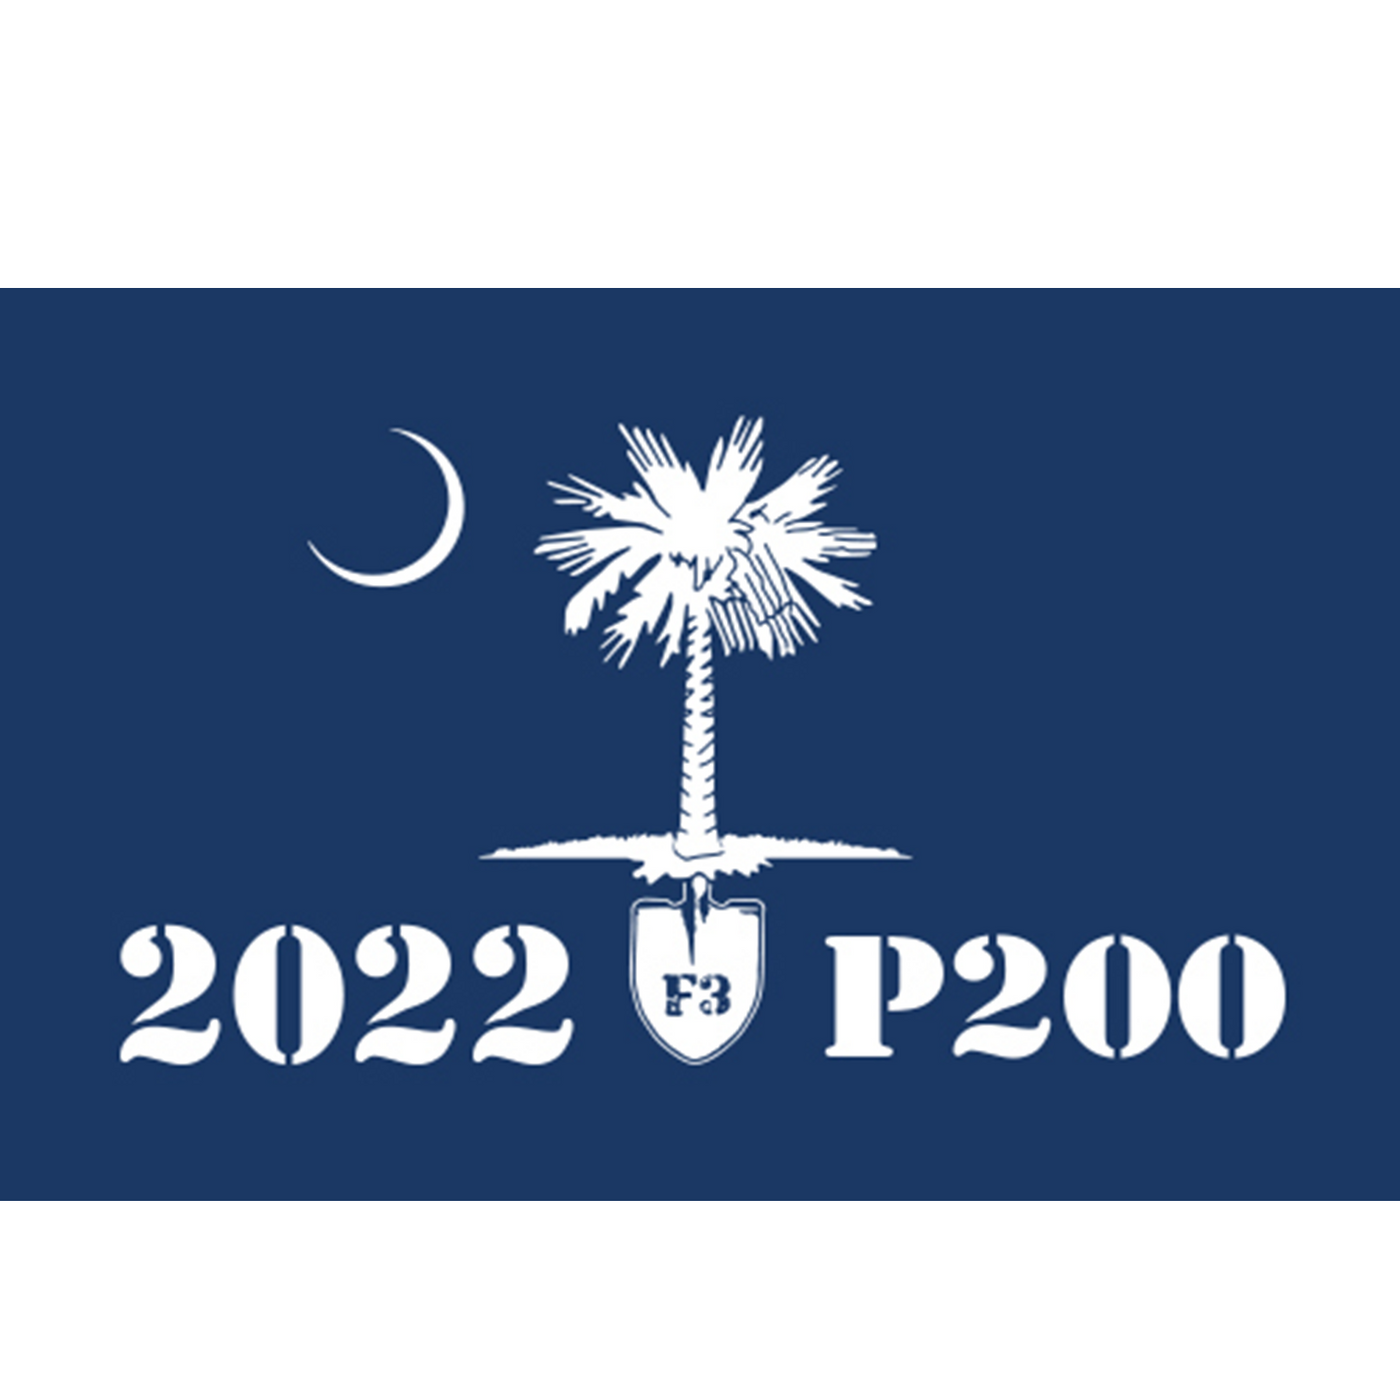 F3 2022 Palmetto 200 Patch Pre-Order January 2022